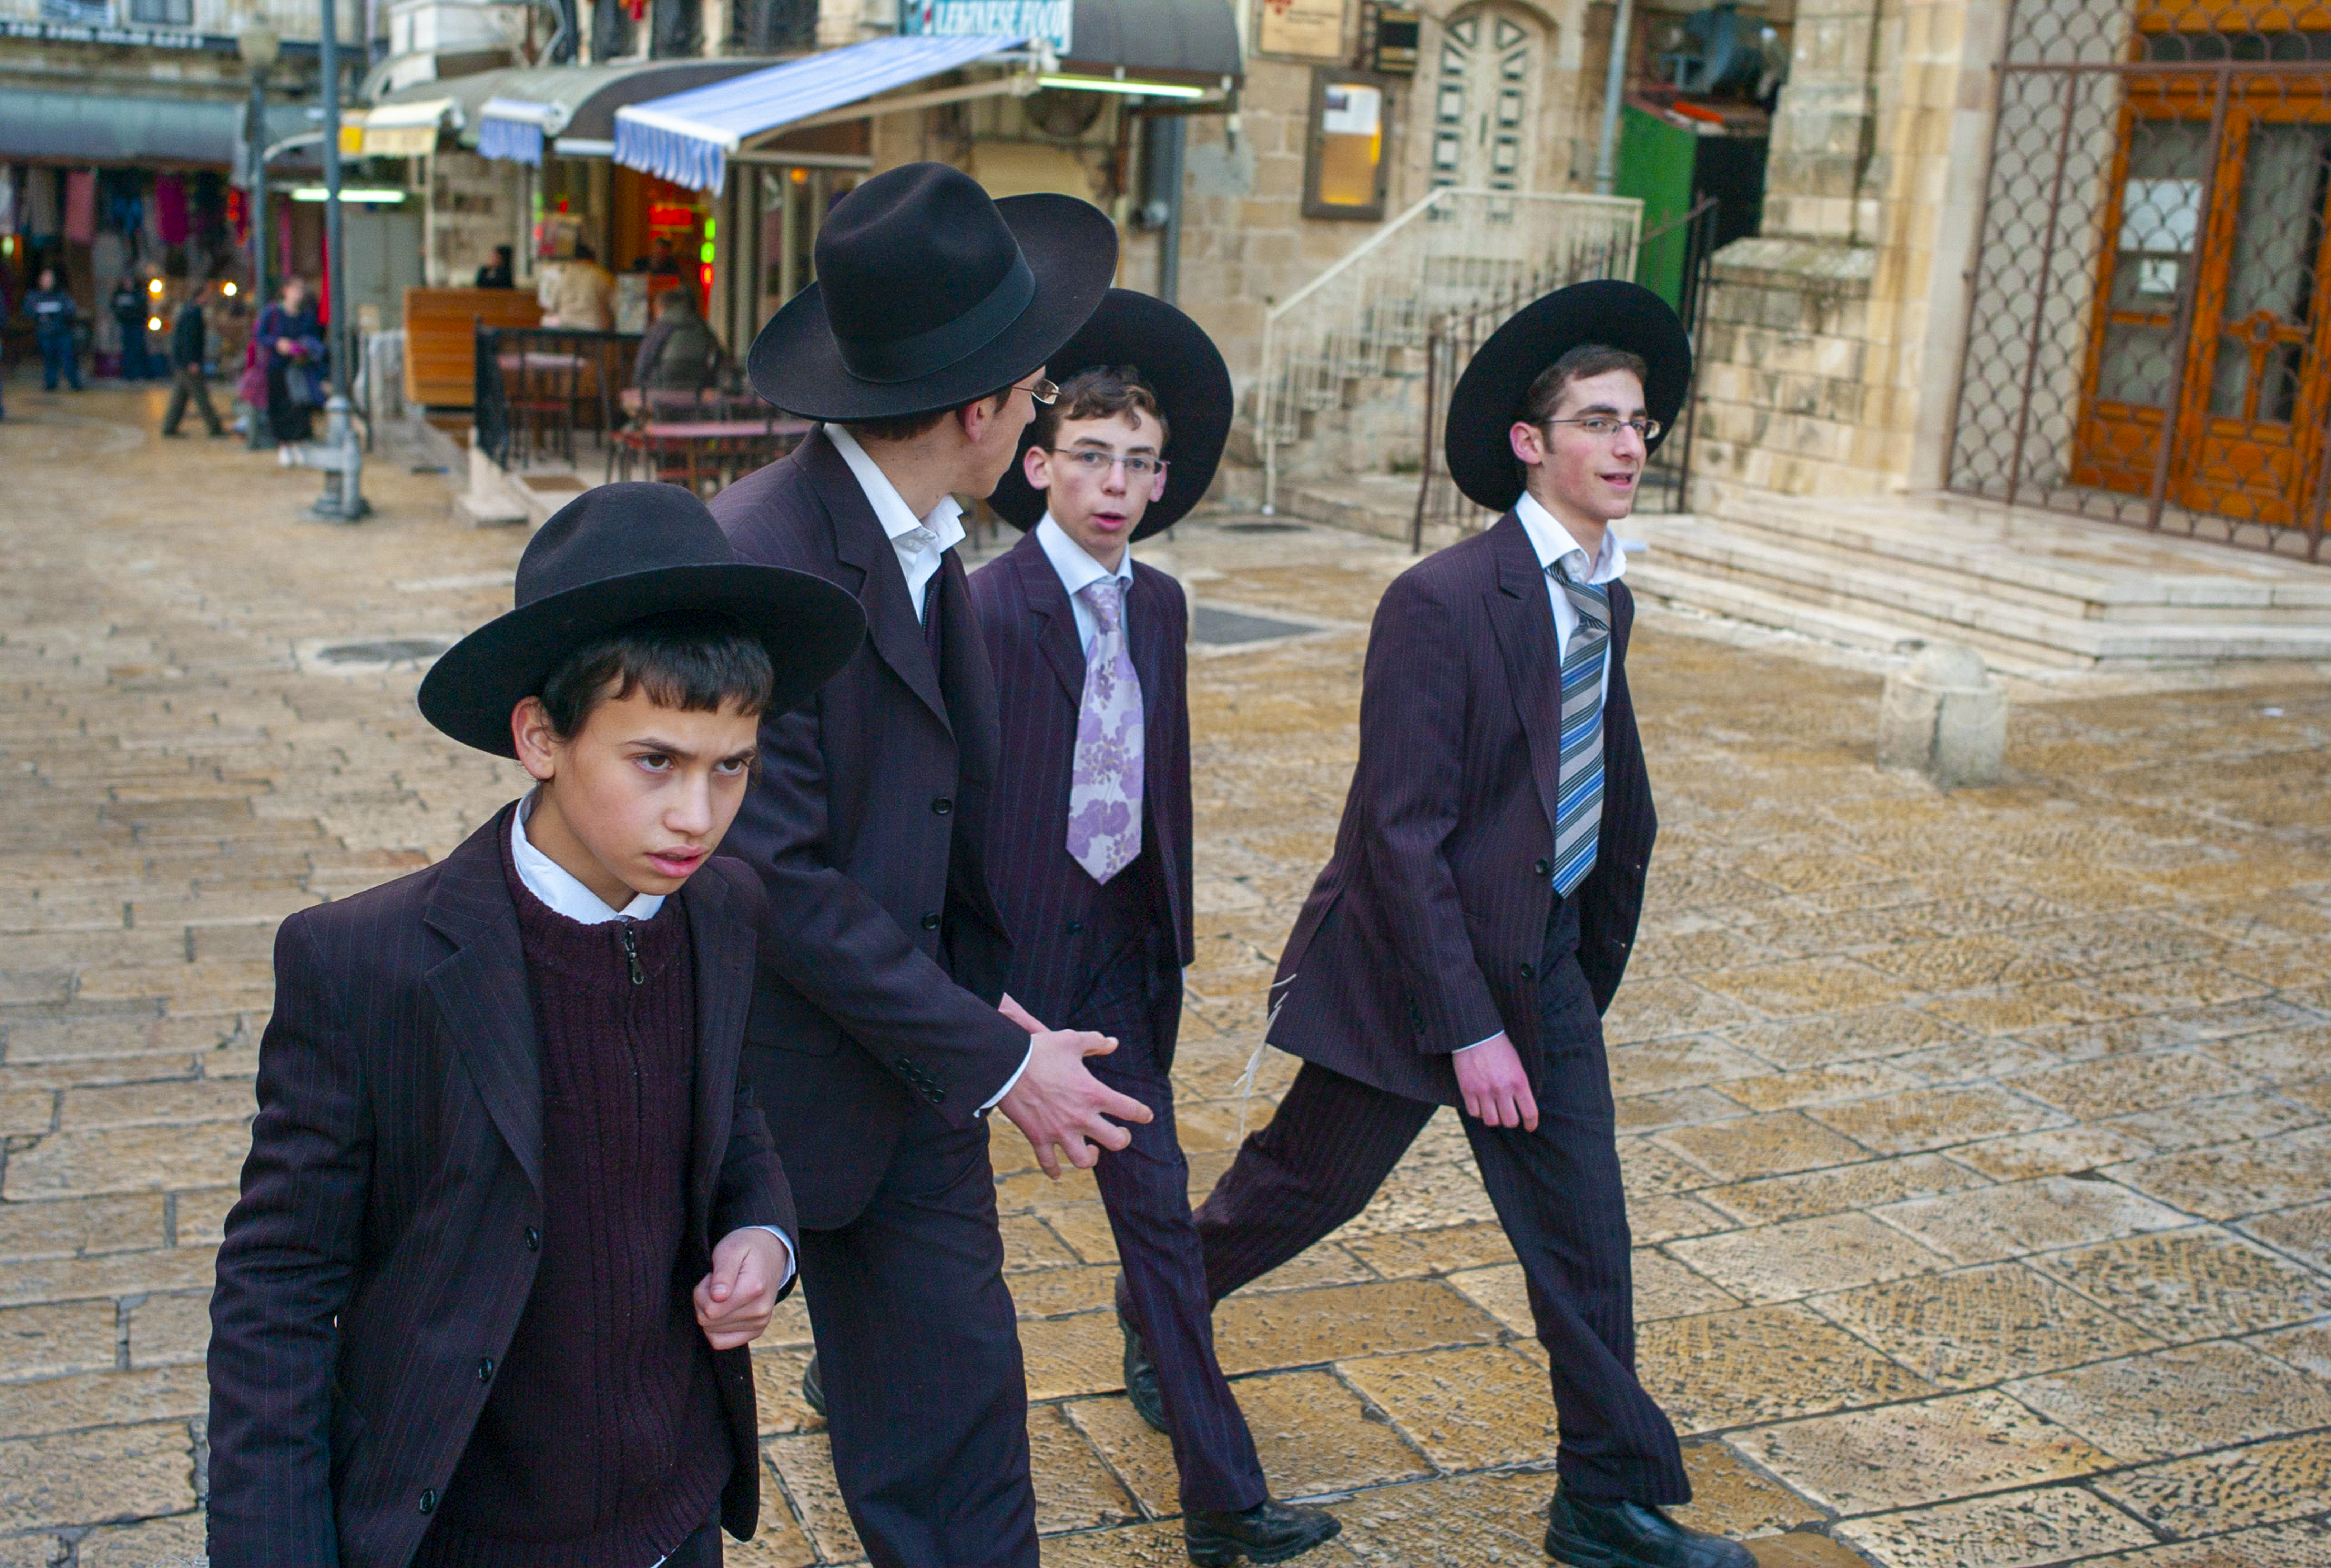 Hasid Boys, Safed